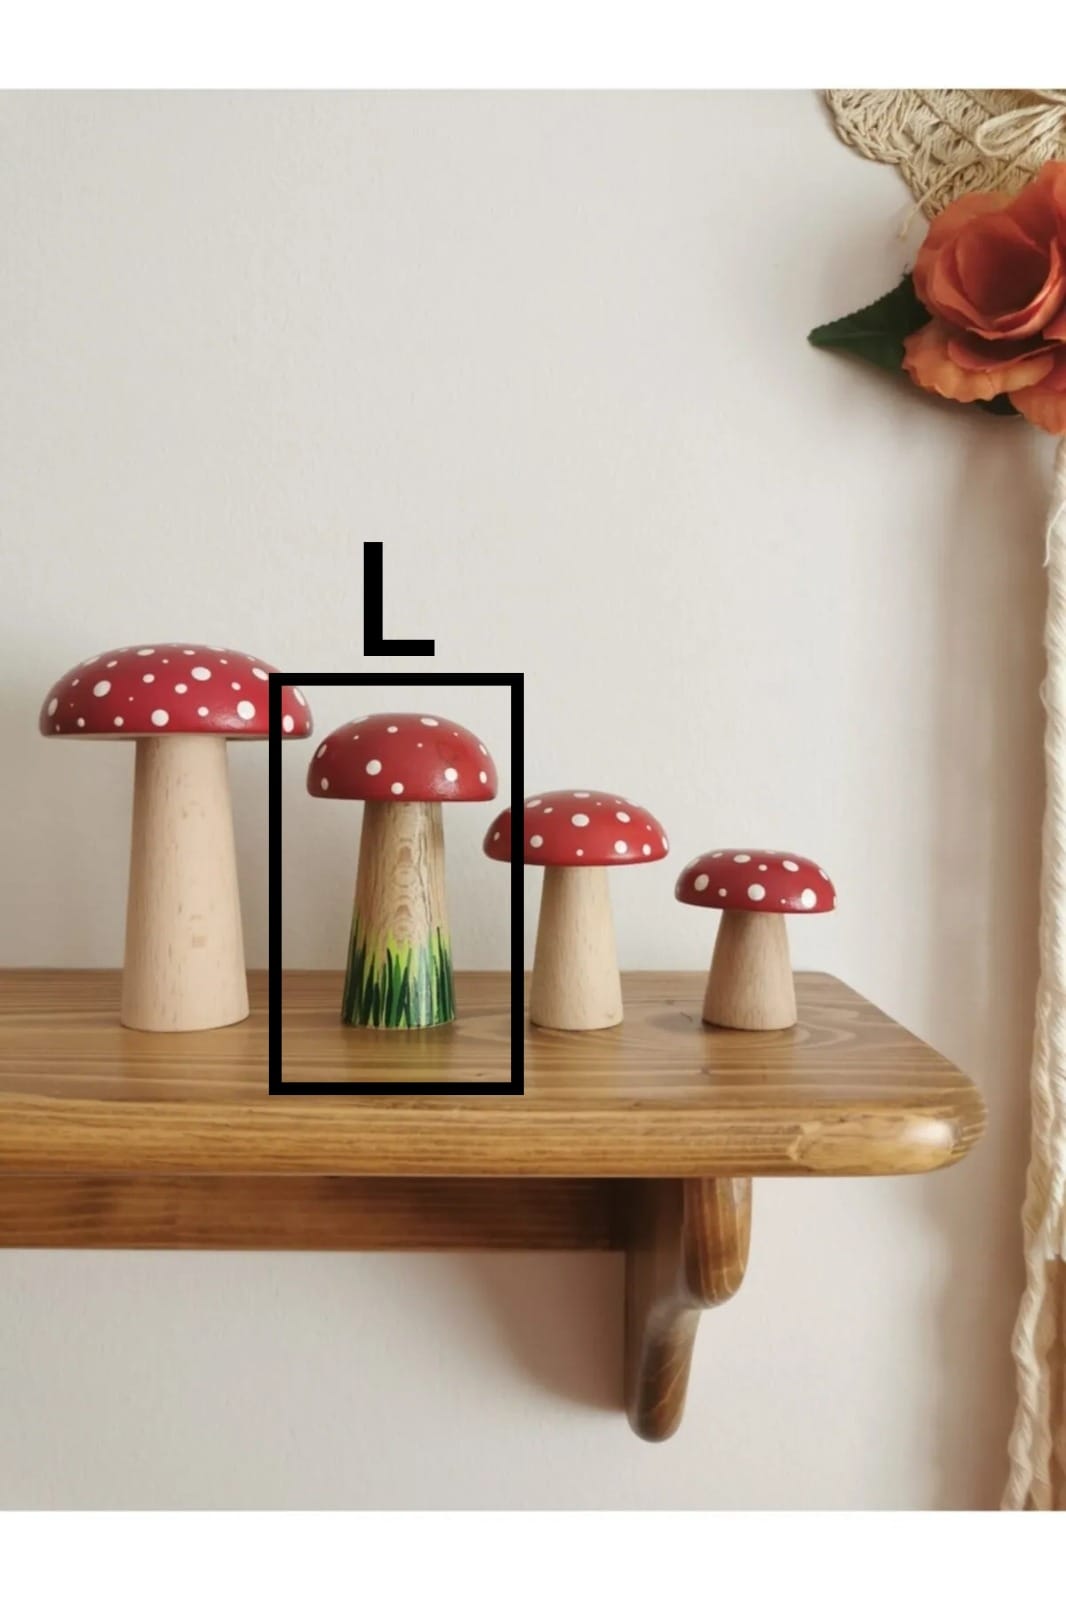 Wooden Red Mushroom Toy